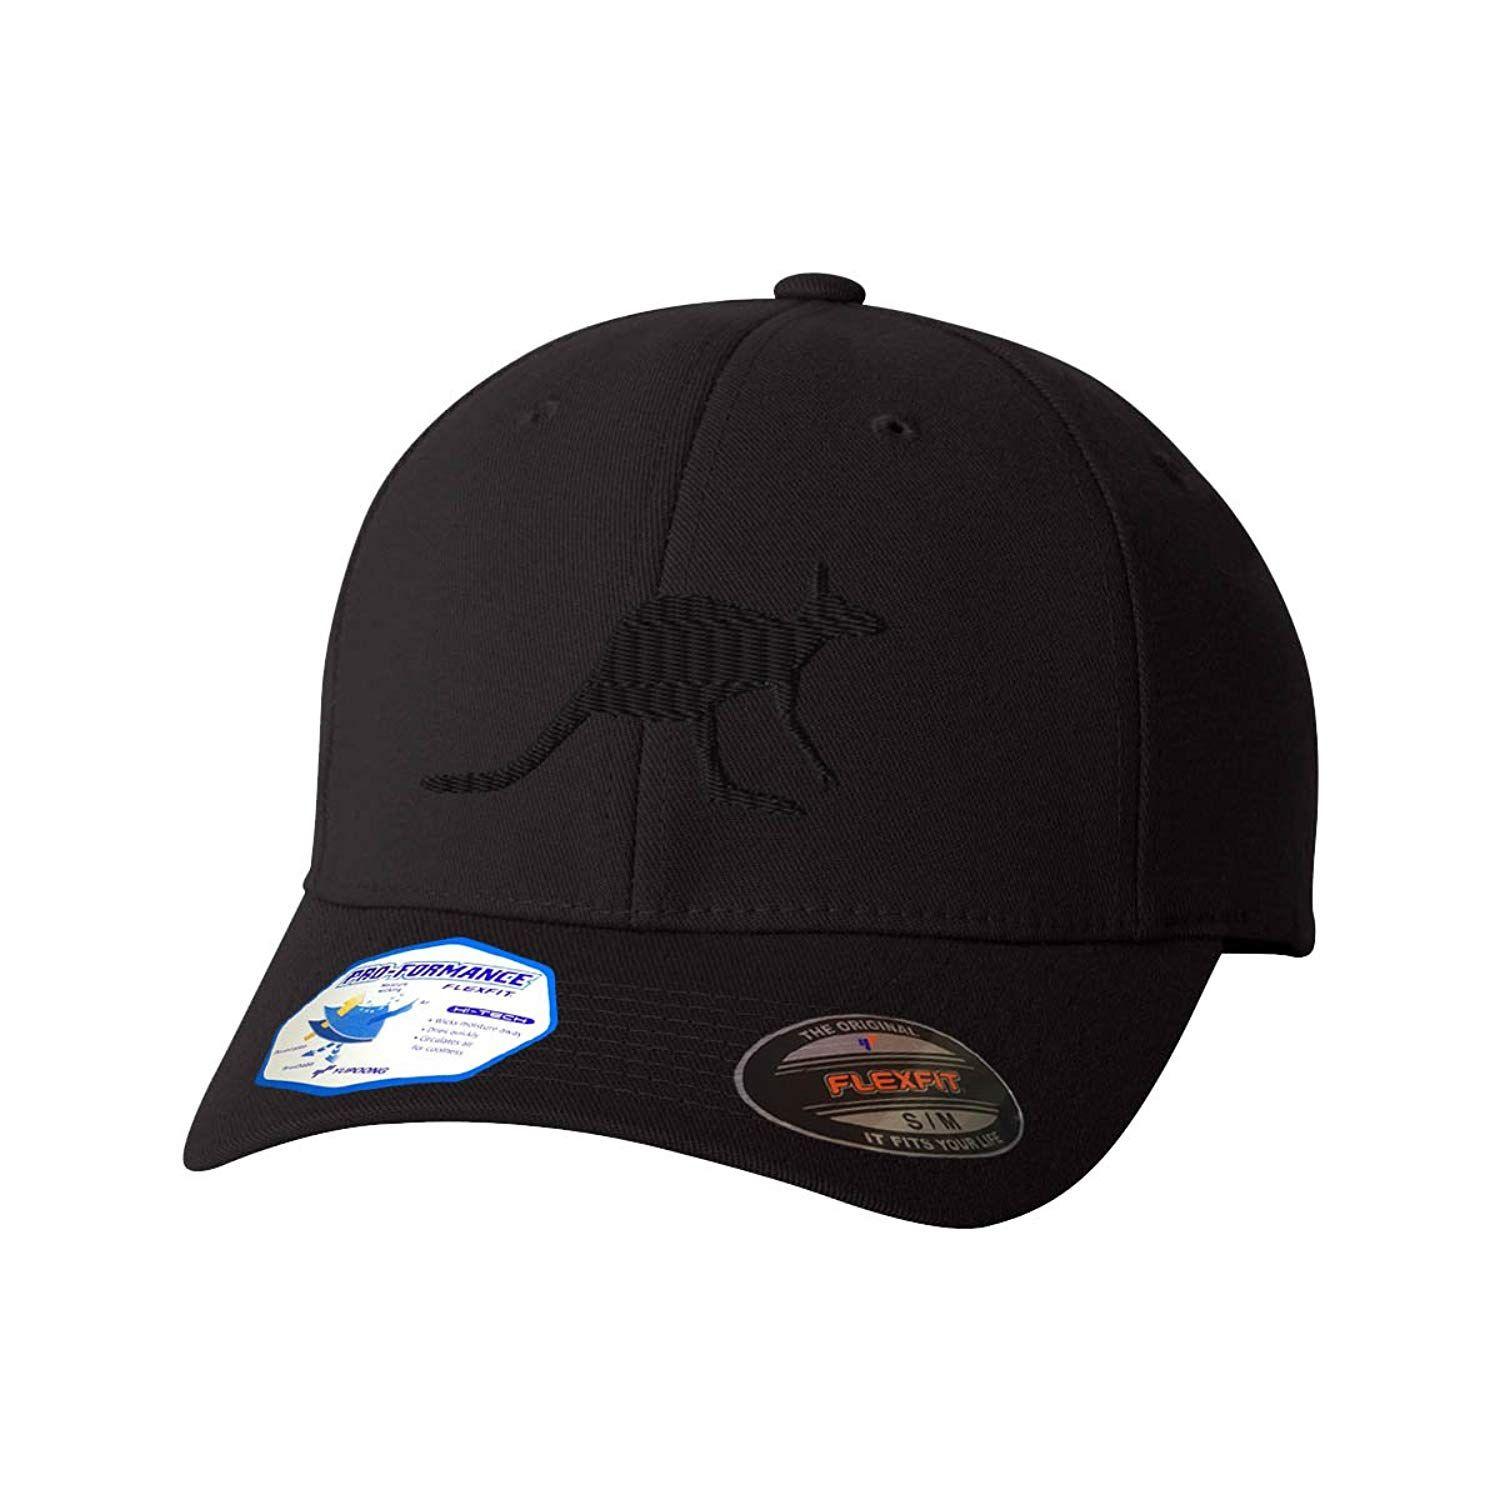 Hats with Kangaroo Logo - Kangaroo Flexfit Pro Formance Embroidered Cap Hat: Clothing